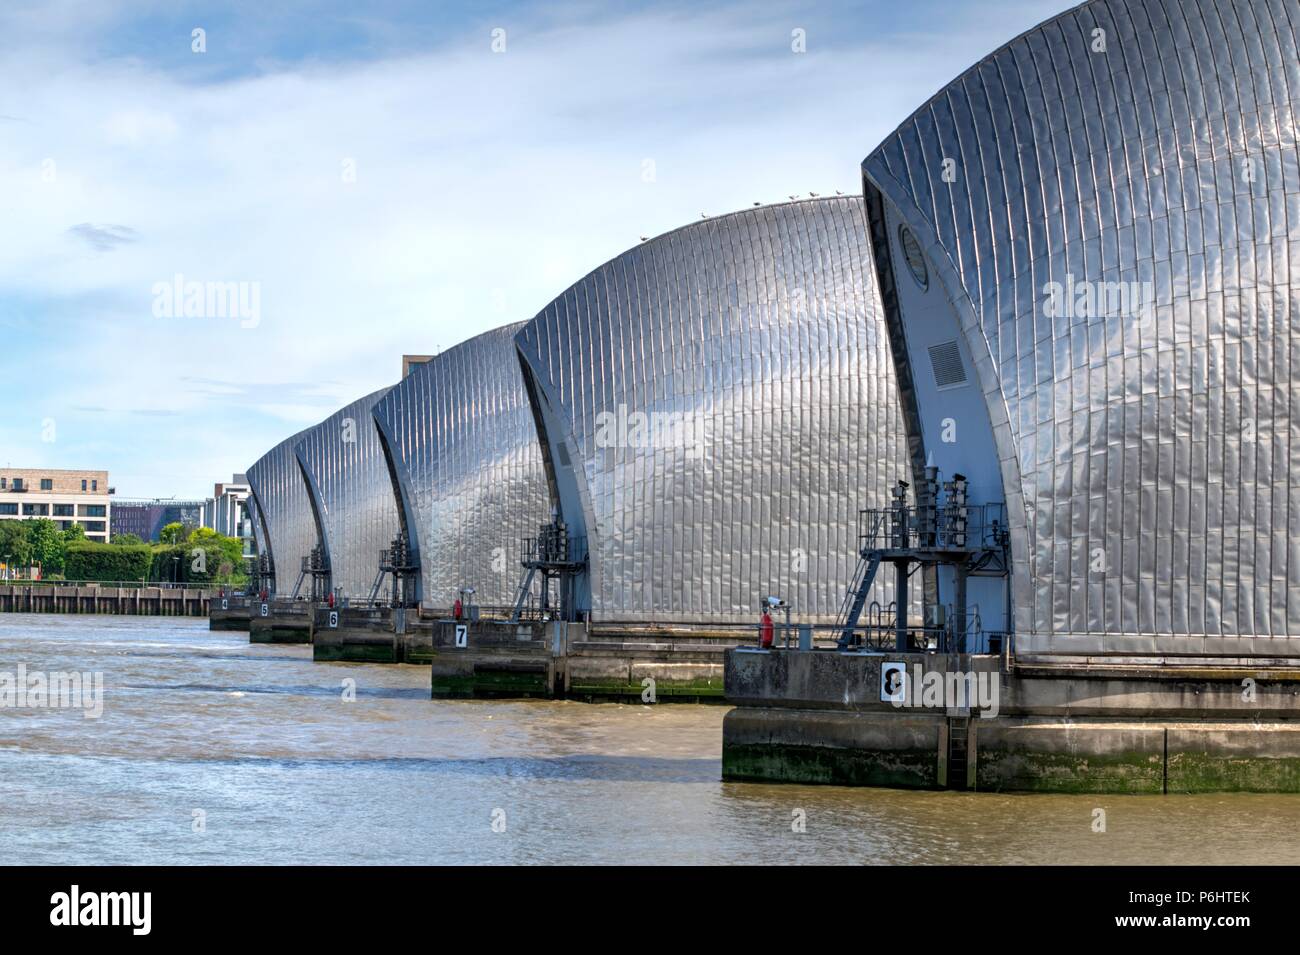 London, United Kingdom - June 23, 2018: Thames Barrier in Woolwich, London, United Kingdom viewed from upstream Stock Photo